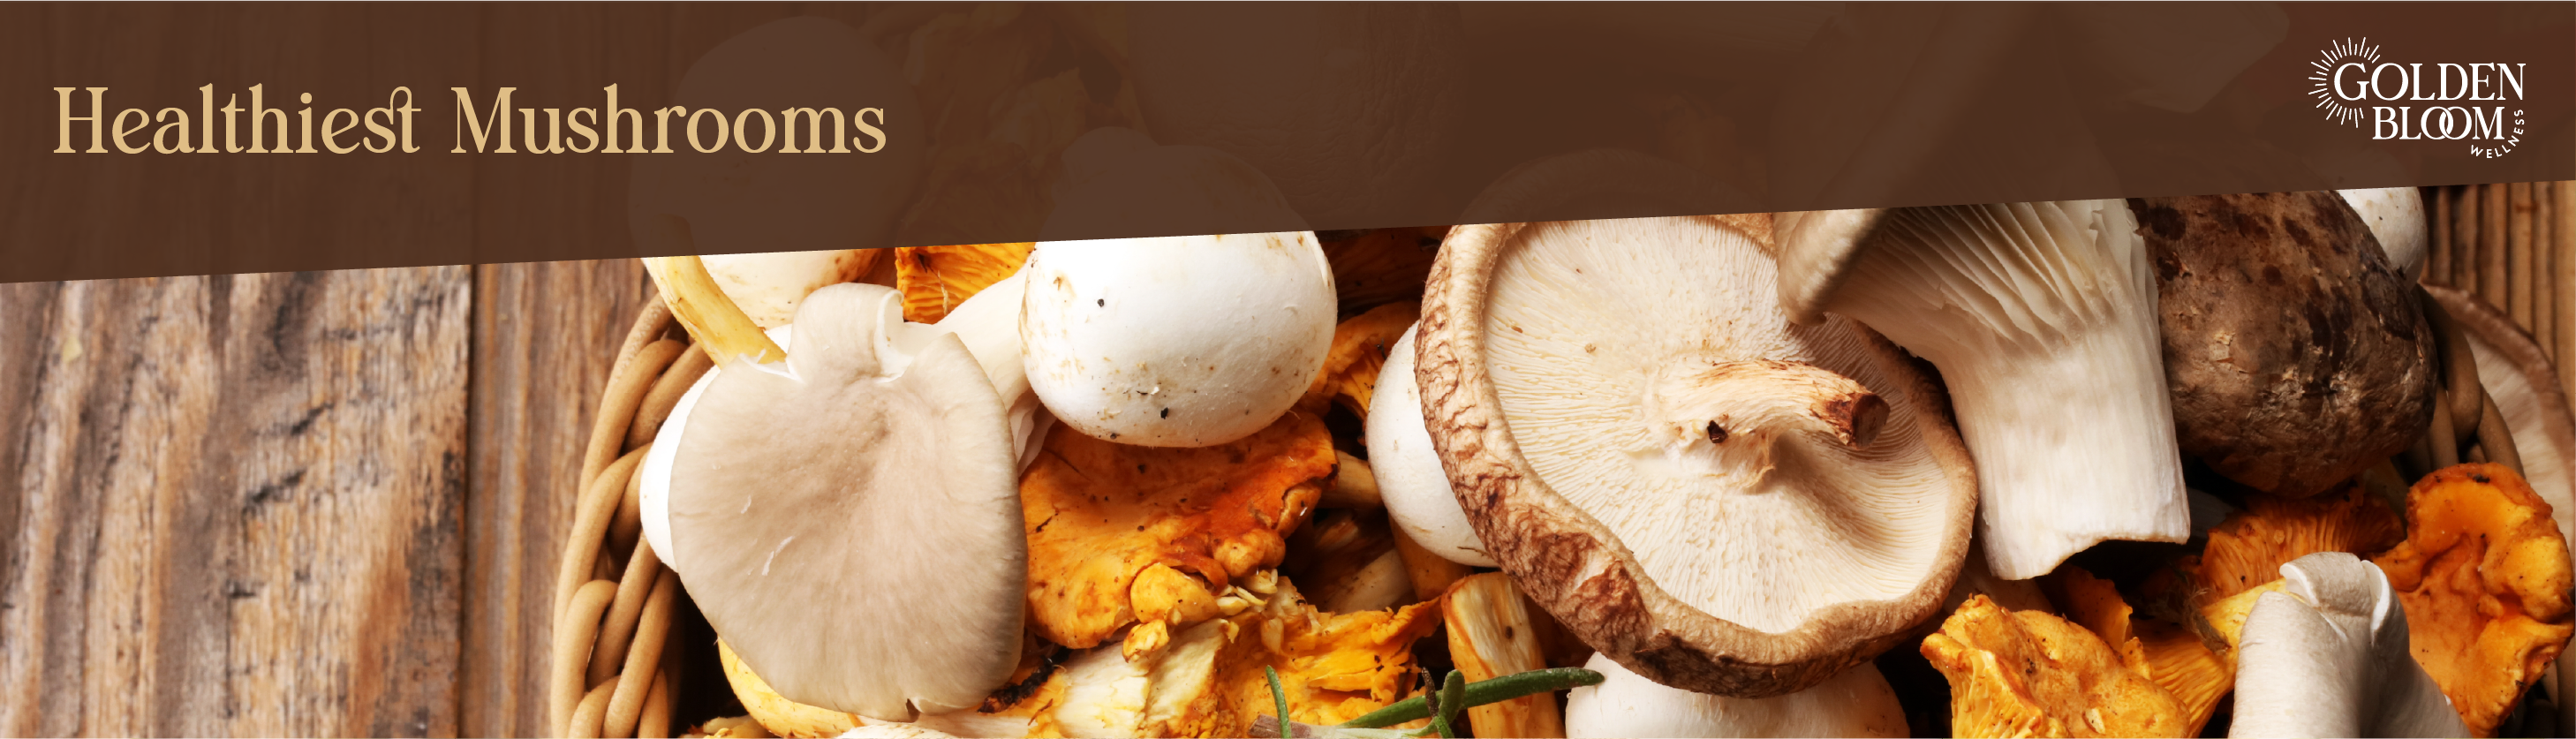 Healthiest Mushroom Featured Image Banner